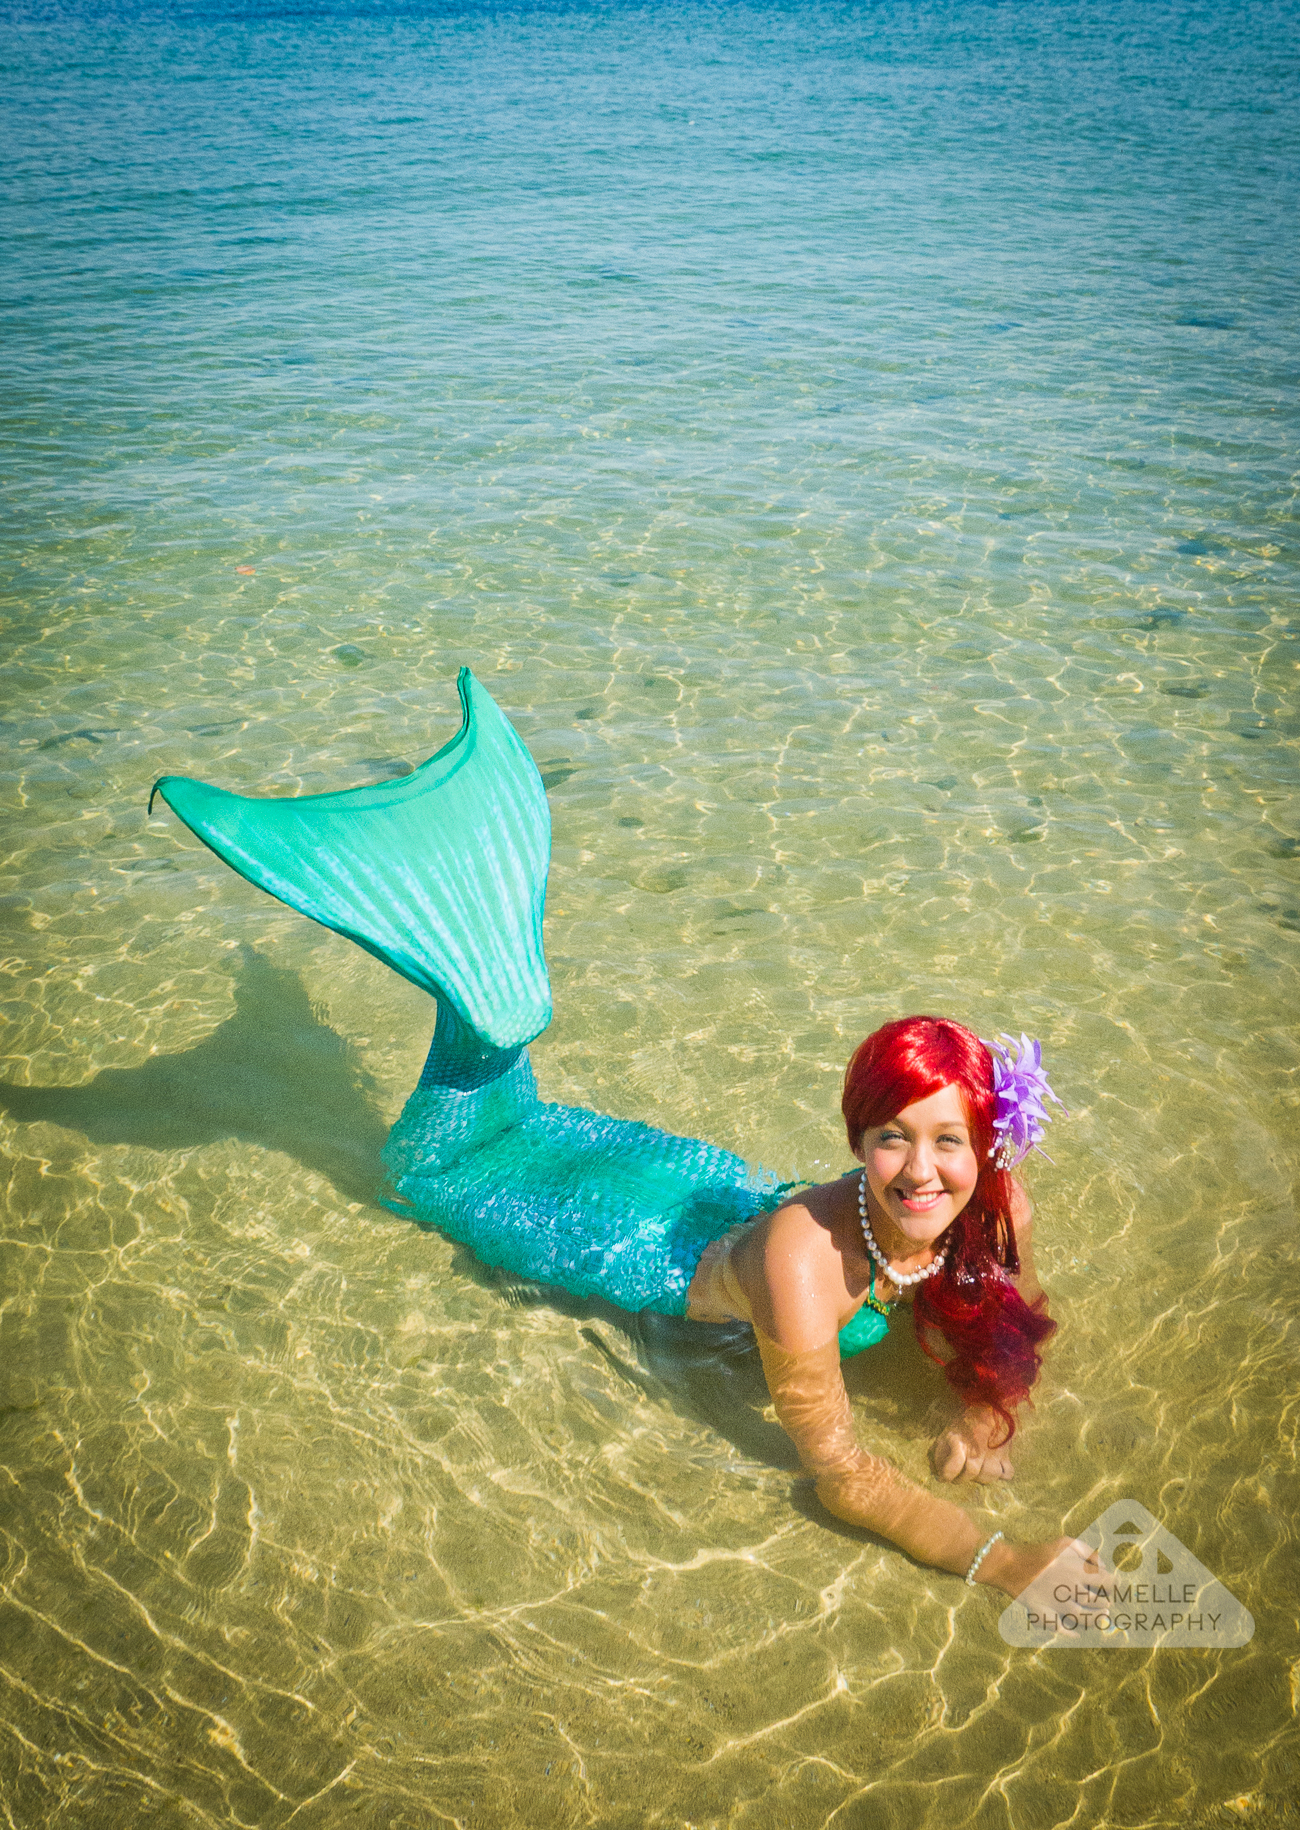 Chamelle Photography - The Little Mermaid Ariel